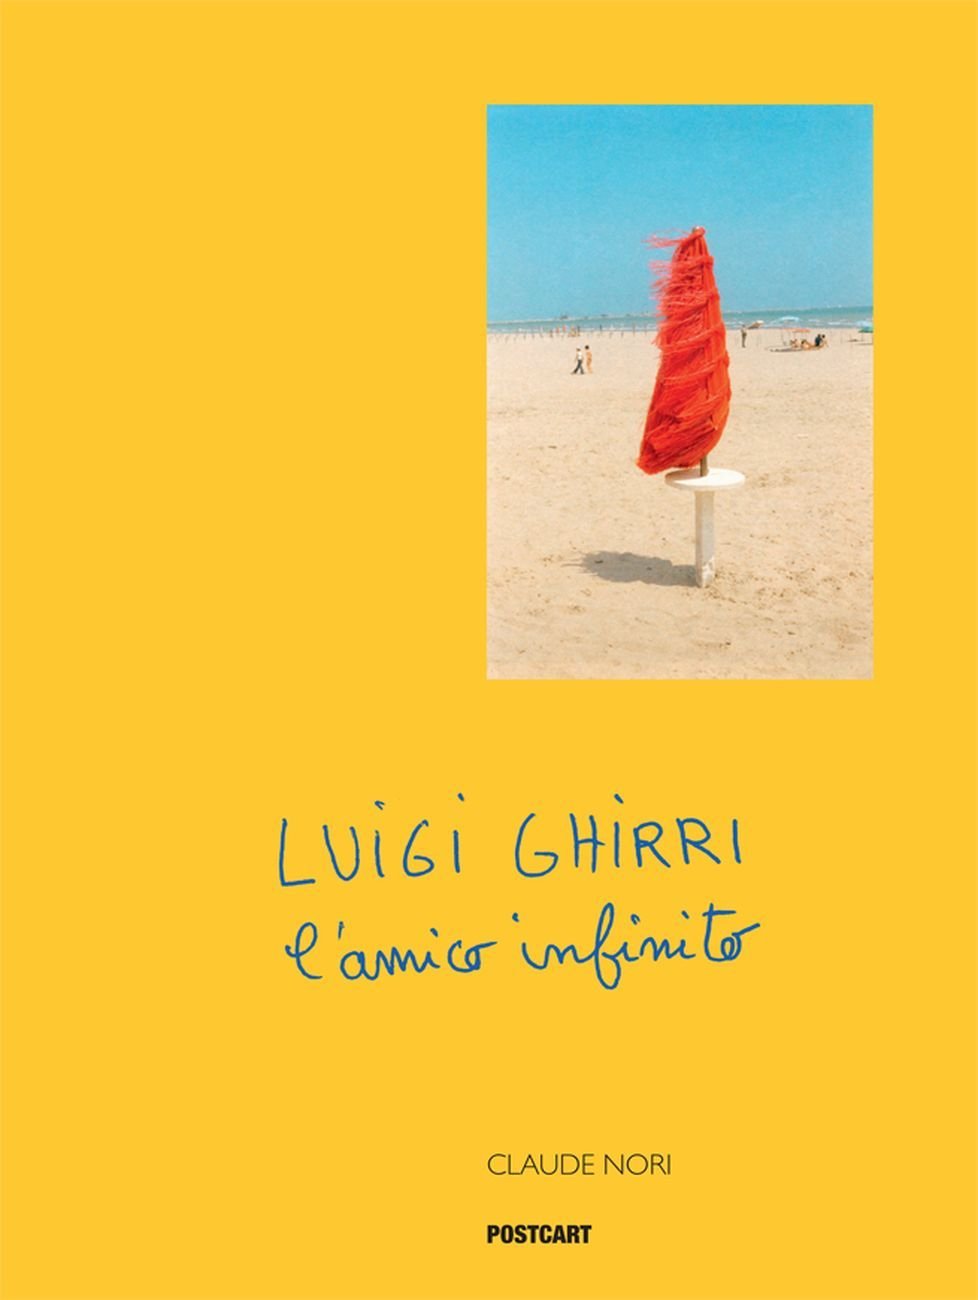 Claude Nori ‒ Luigi Ghirri. L'amico infinito (Postcart, Roma 2019)